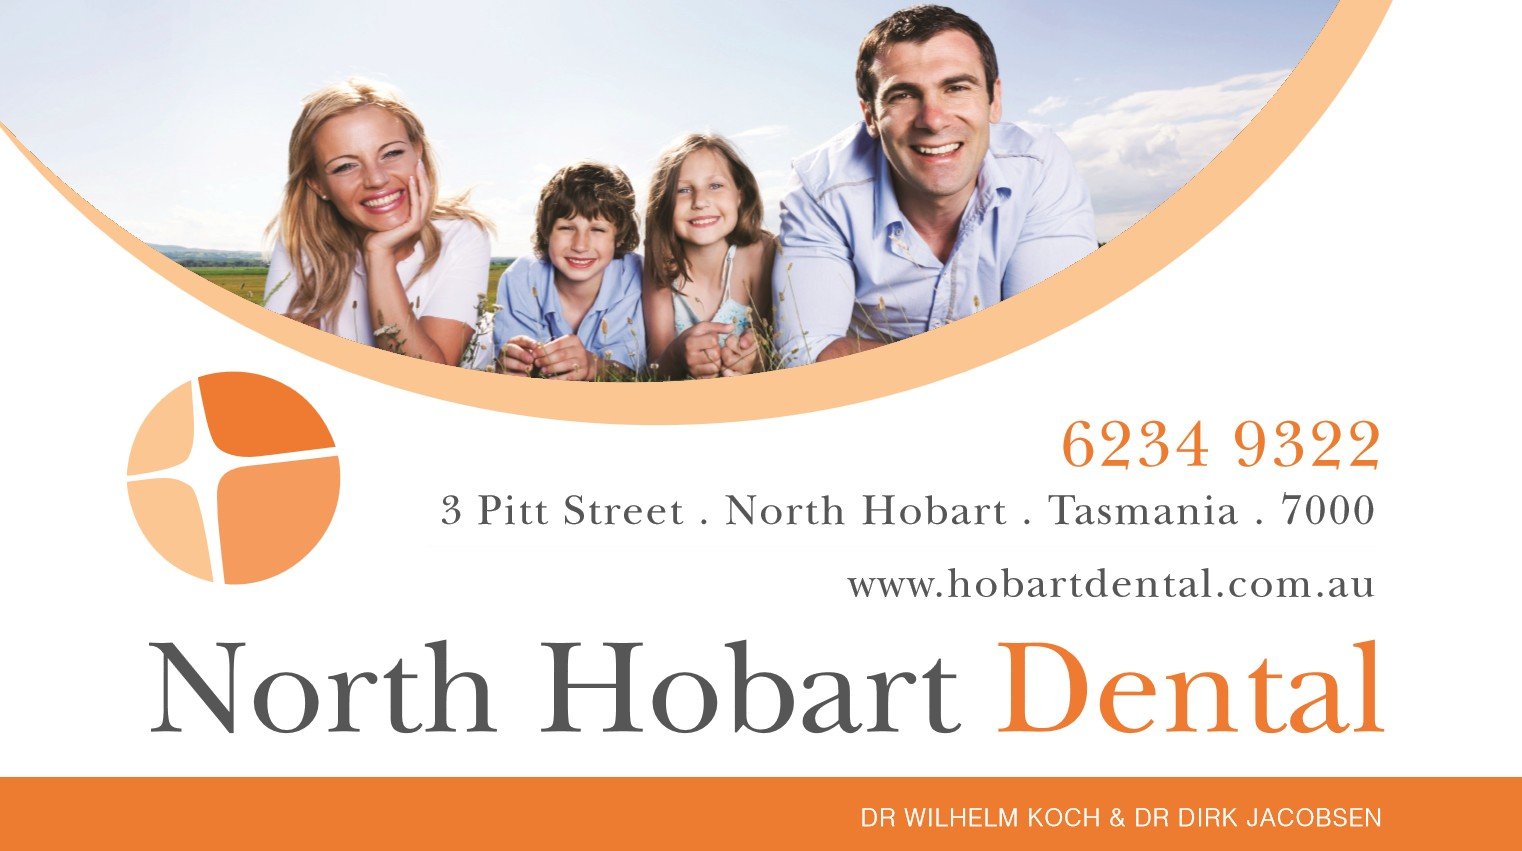 North Hobart Dental - Dentists Newcastle